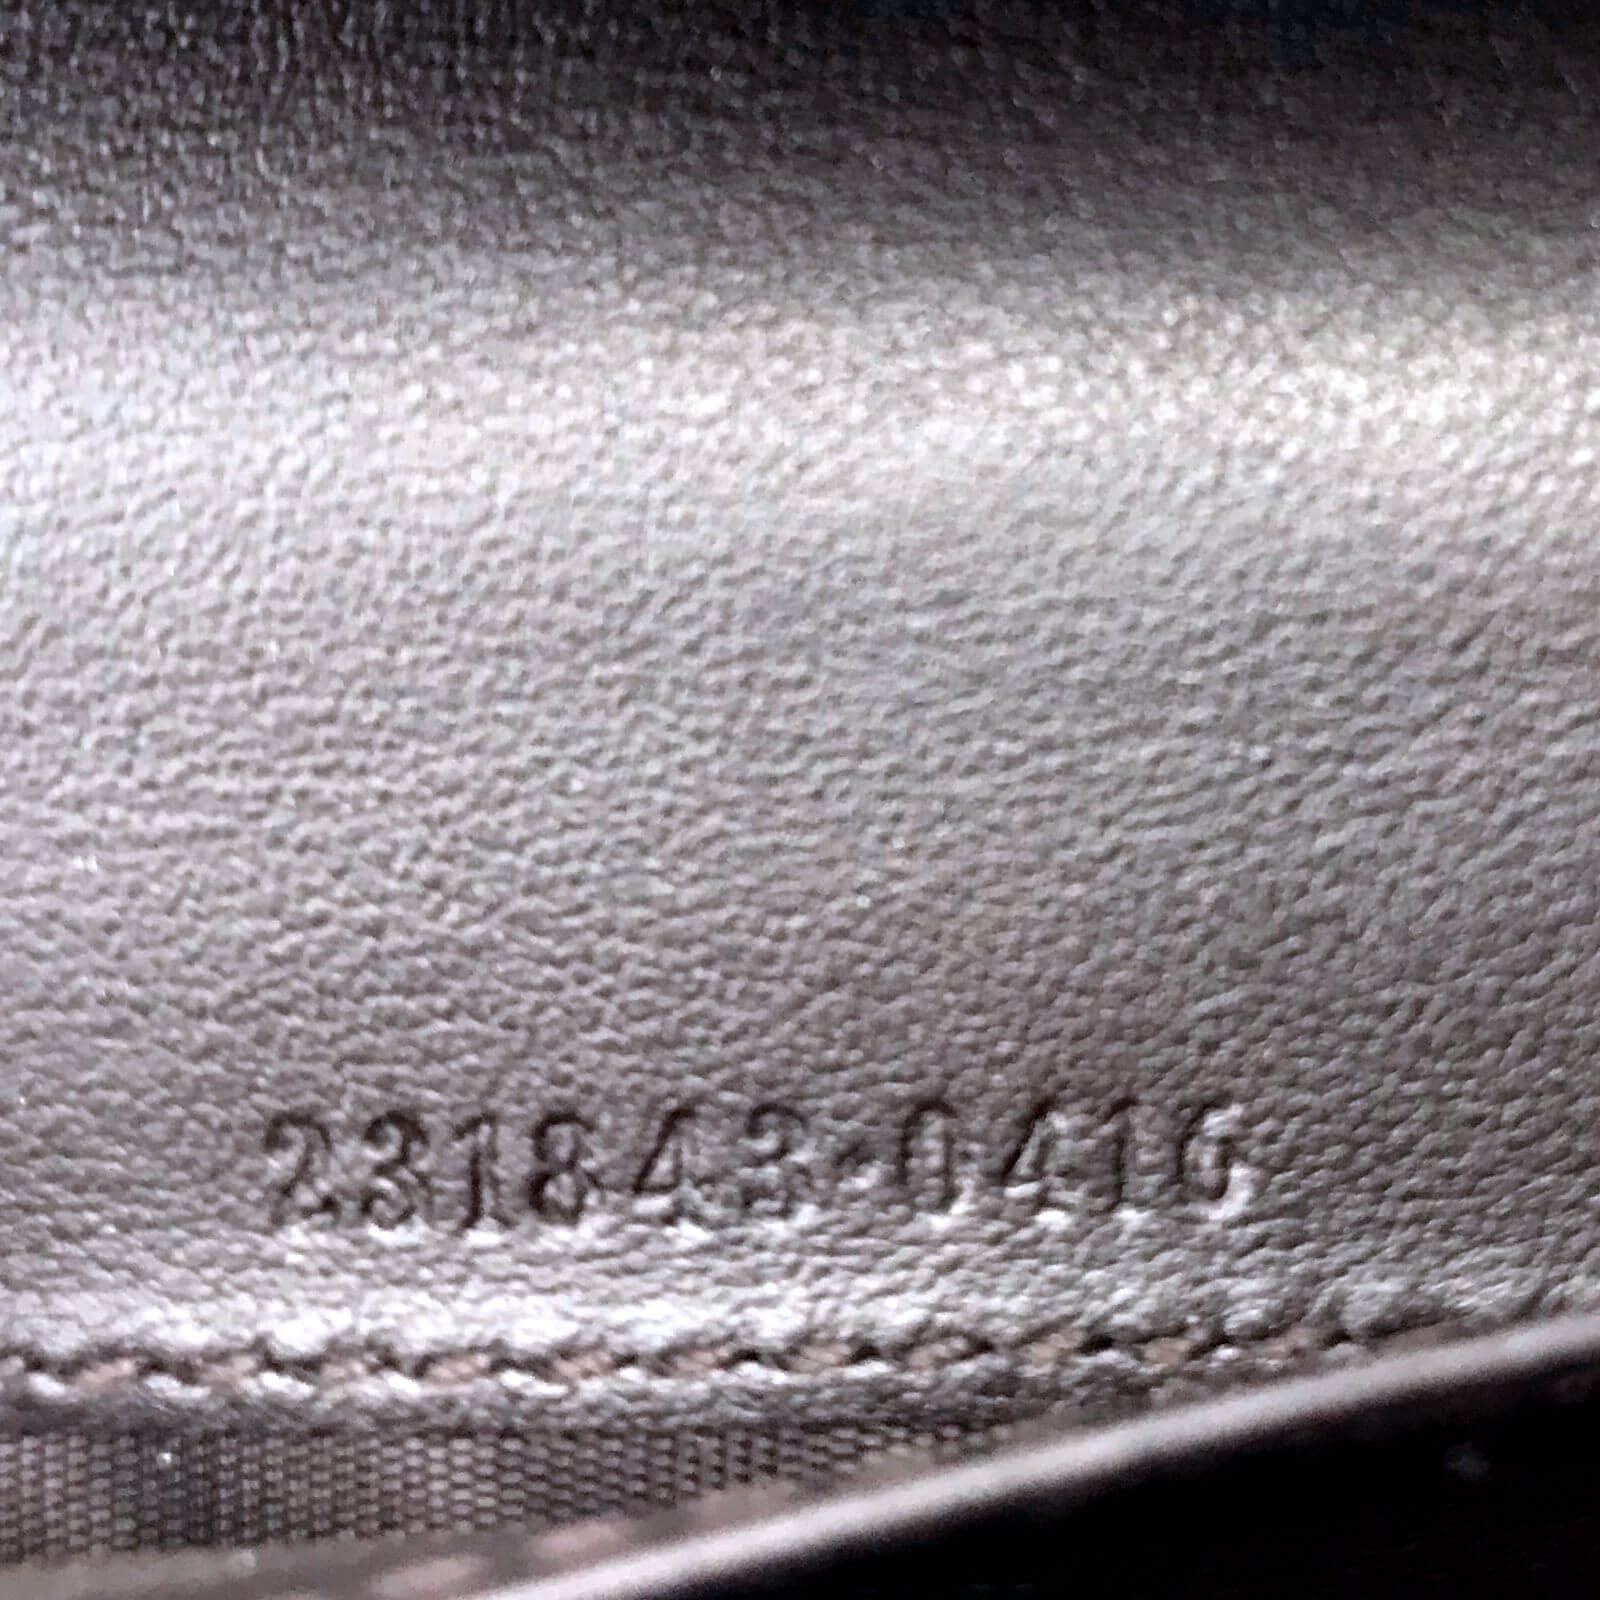 Gucci GG Interlocking Continental Leather Wallet Black 598166